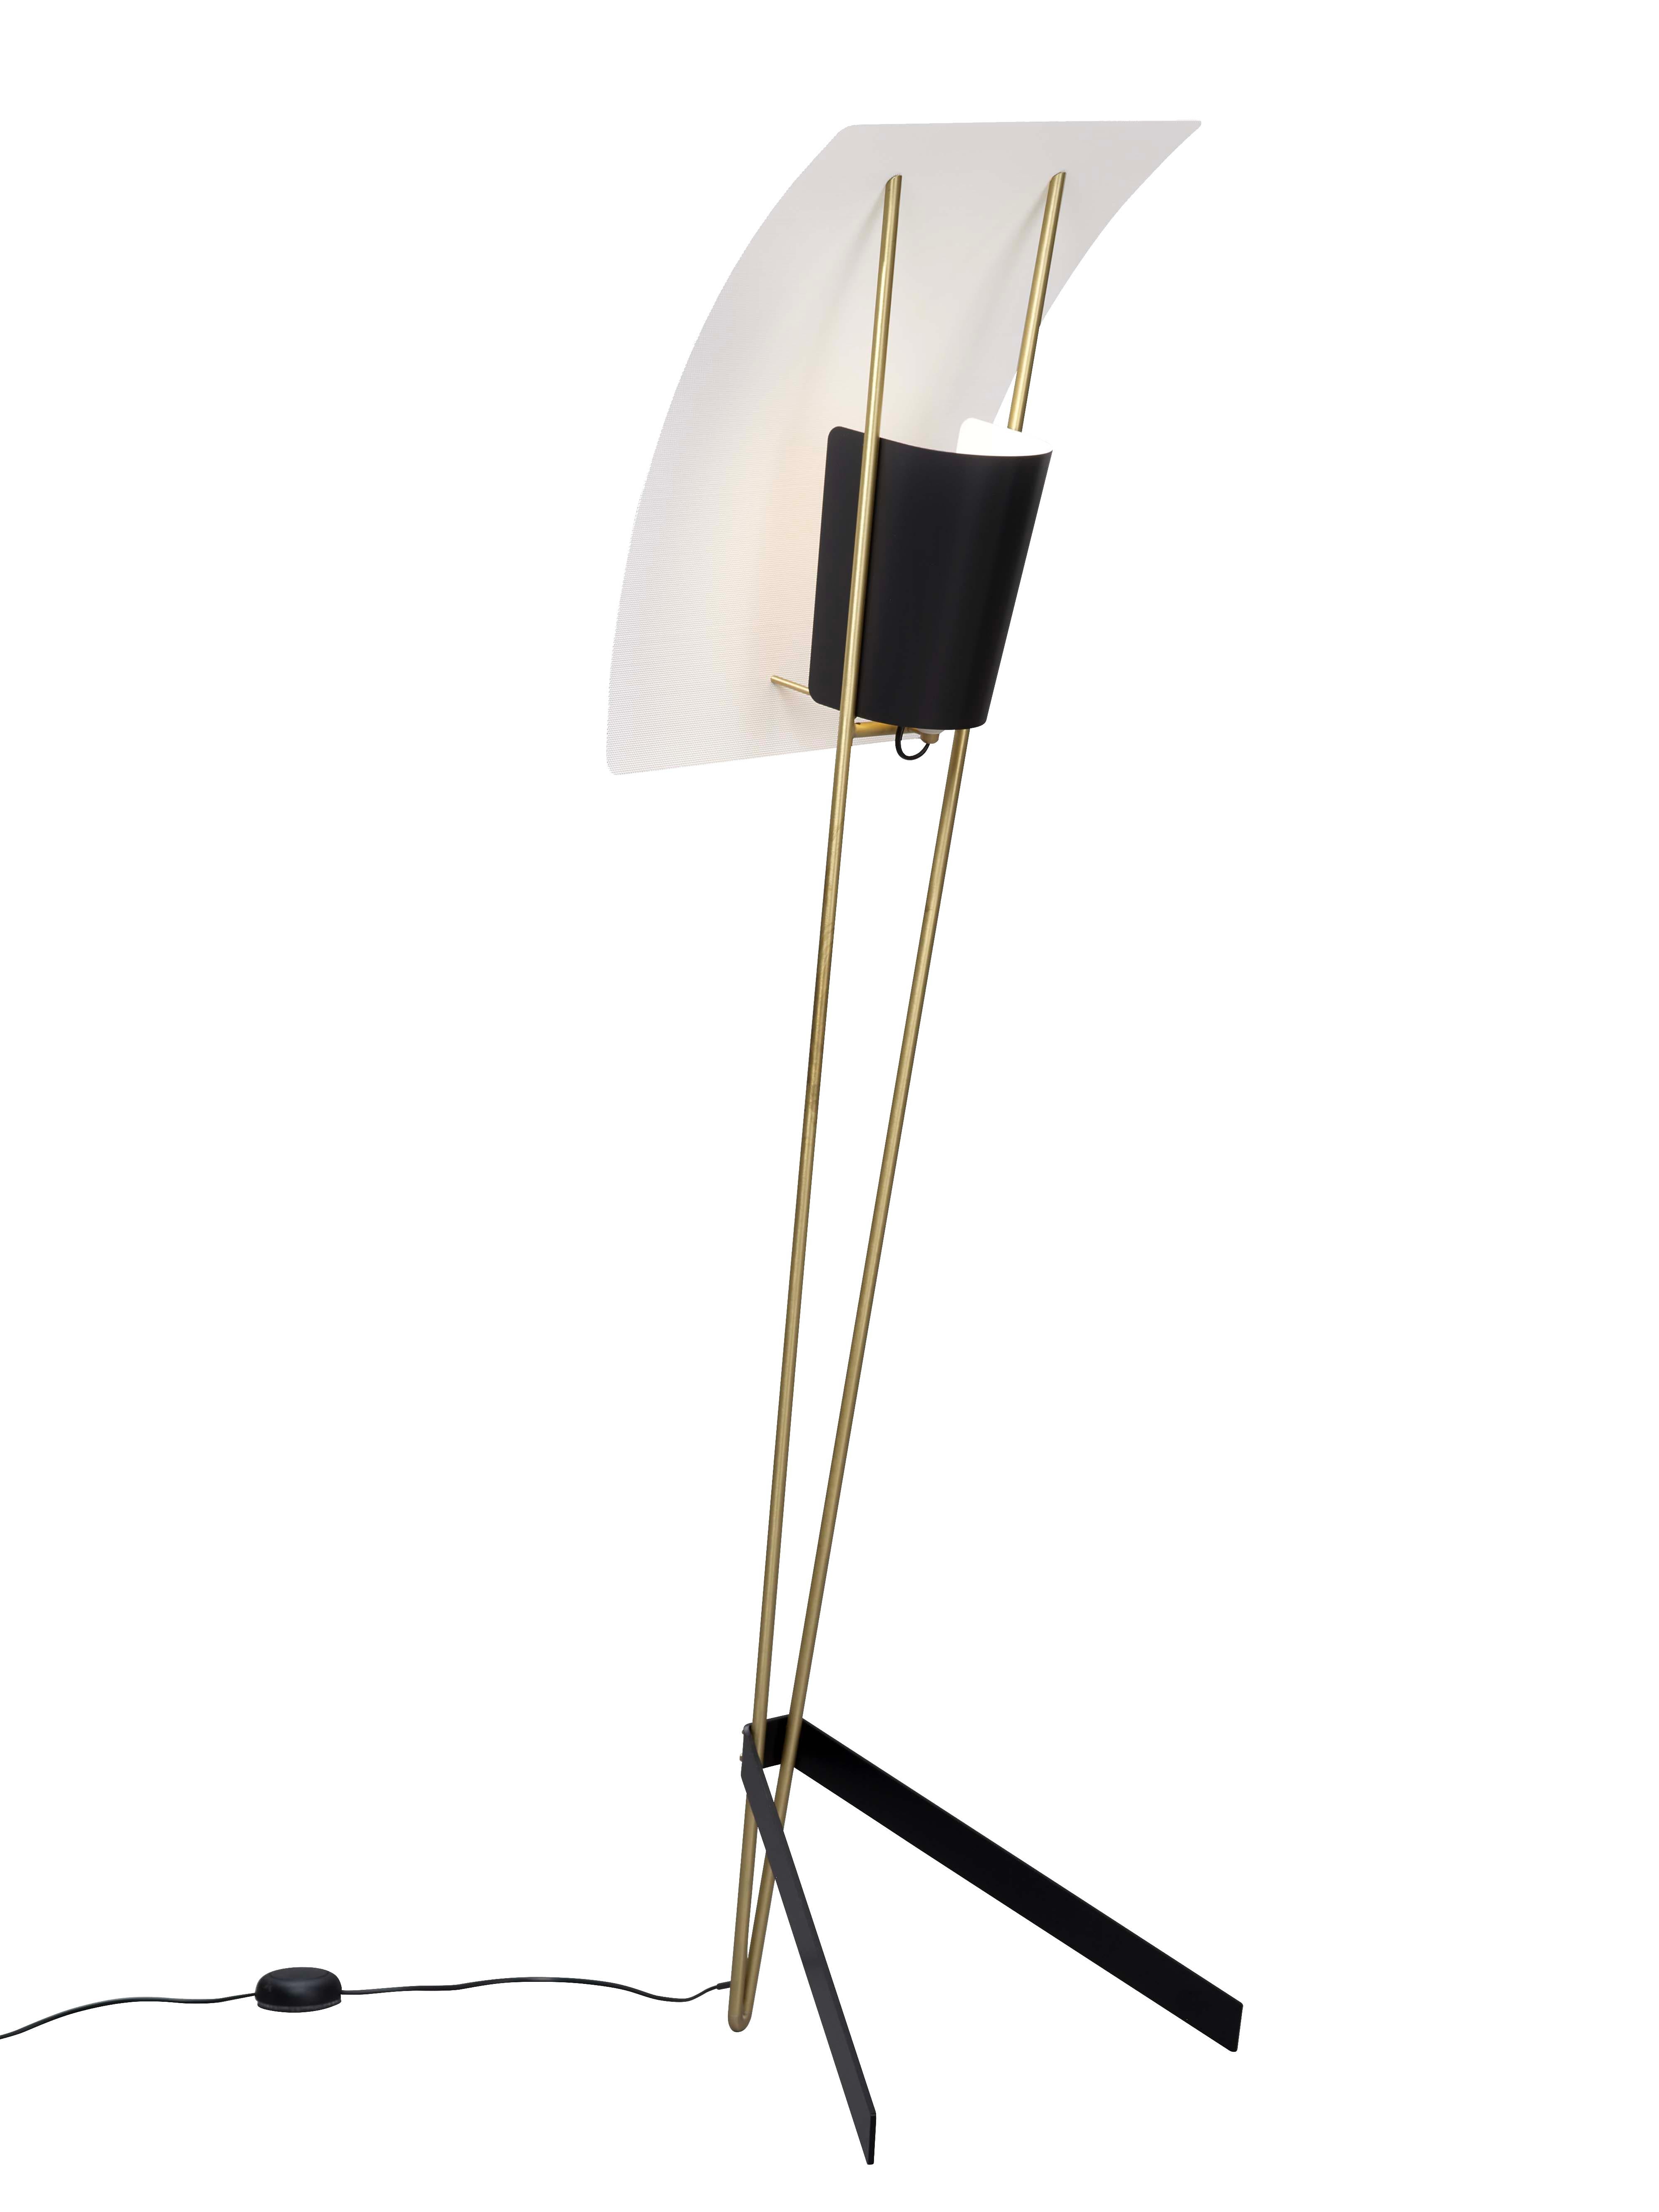 Pierre Guariche Kite Floor Lamp in Black and White for Sammode Studio In New Condition For Sale In Glendale, CA